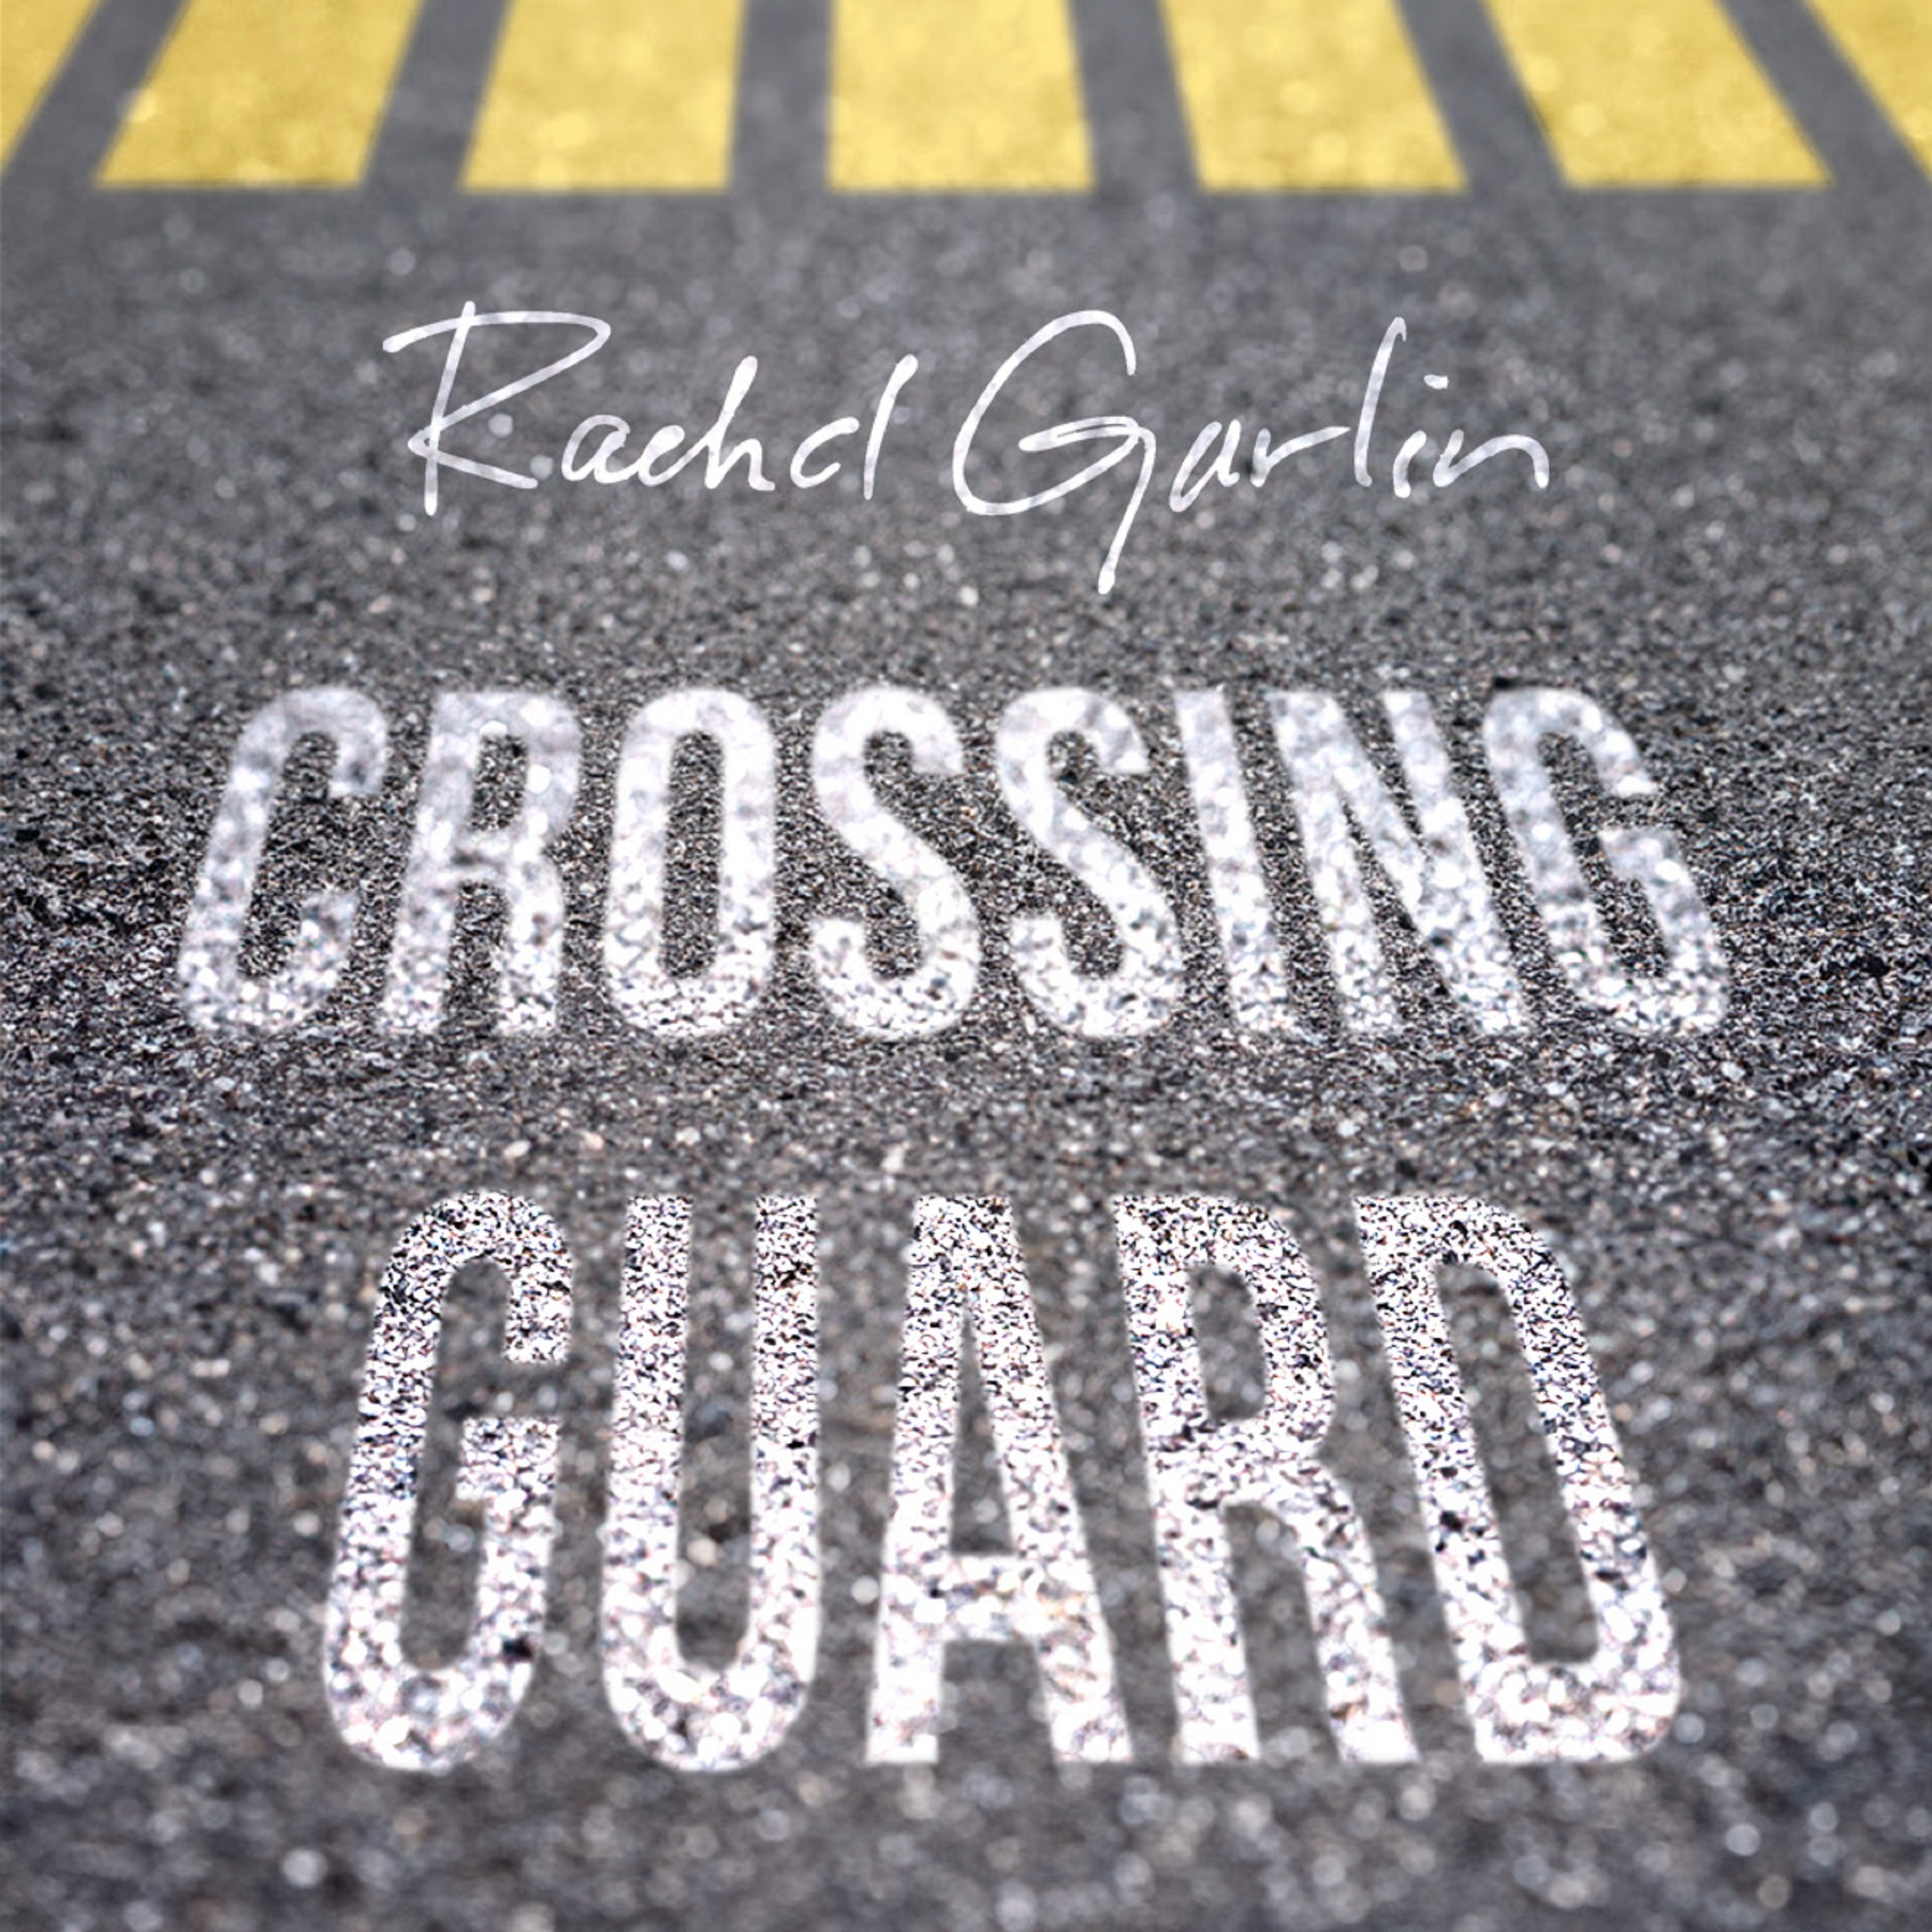 Rachel Garlin's Newest Single, "Crossing Guard" is Out Now